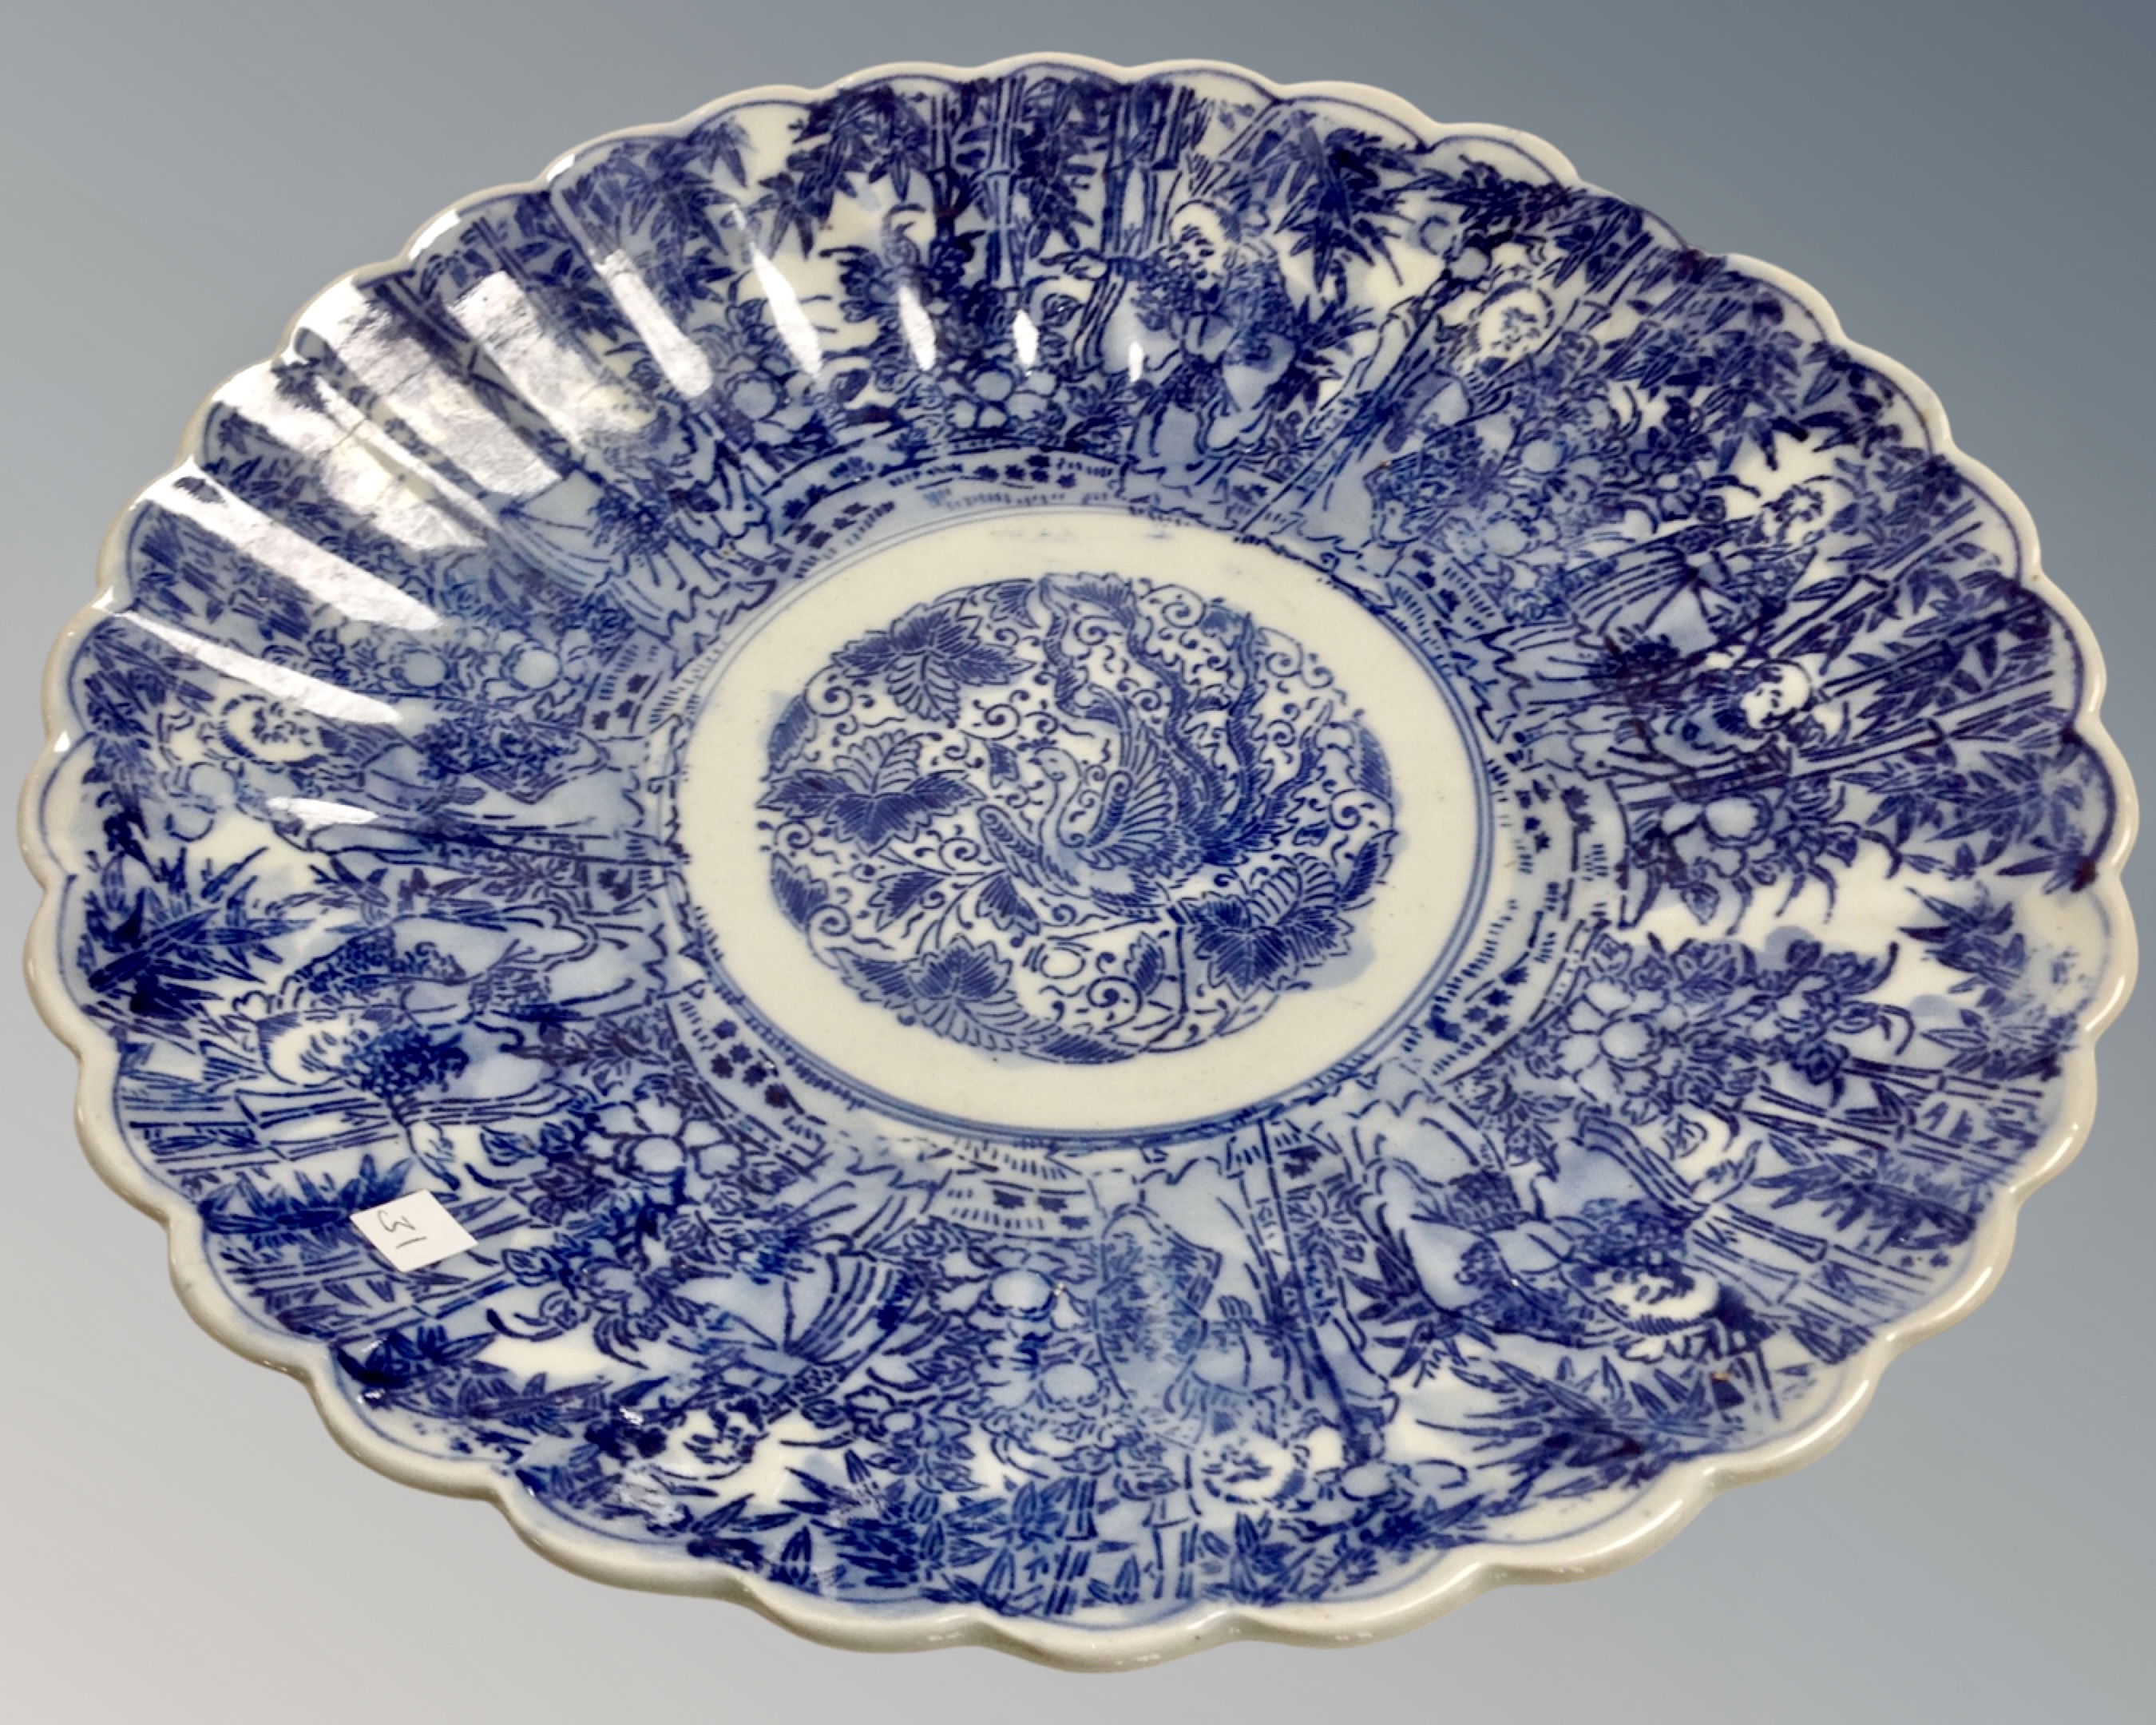 A Chinese blue and white scalloped edge imari plate.